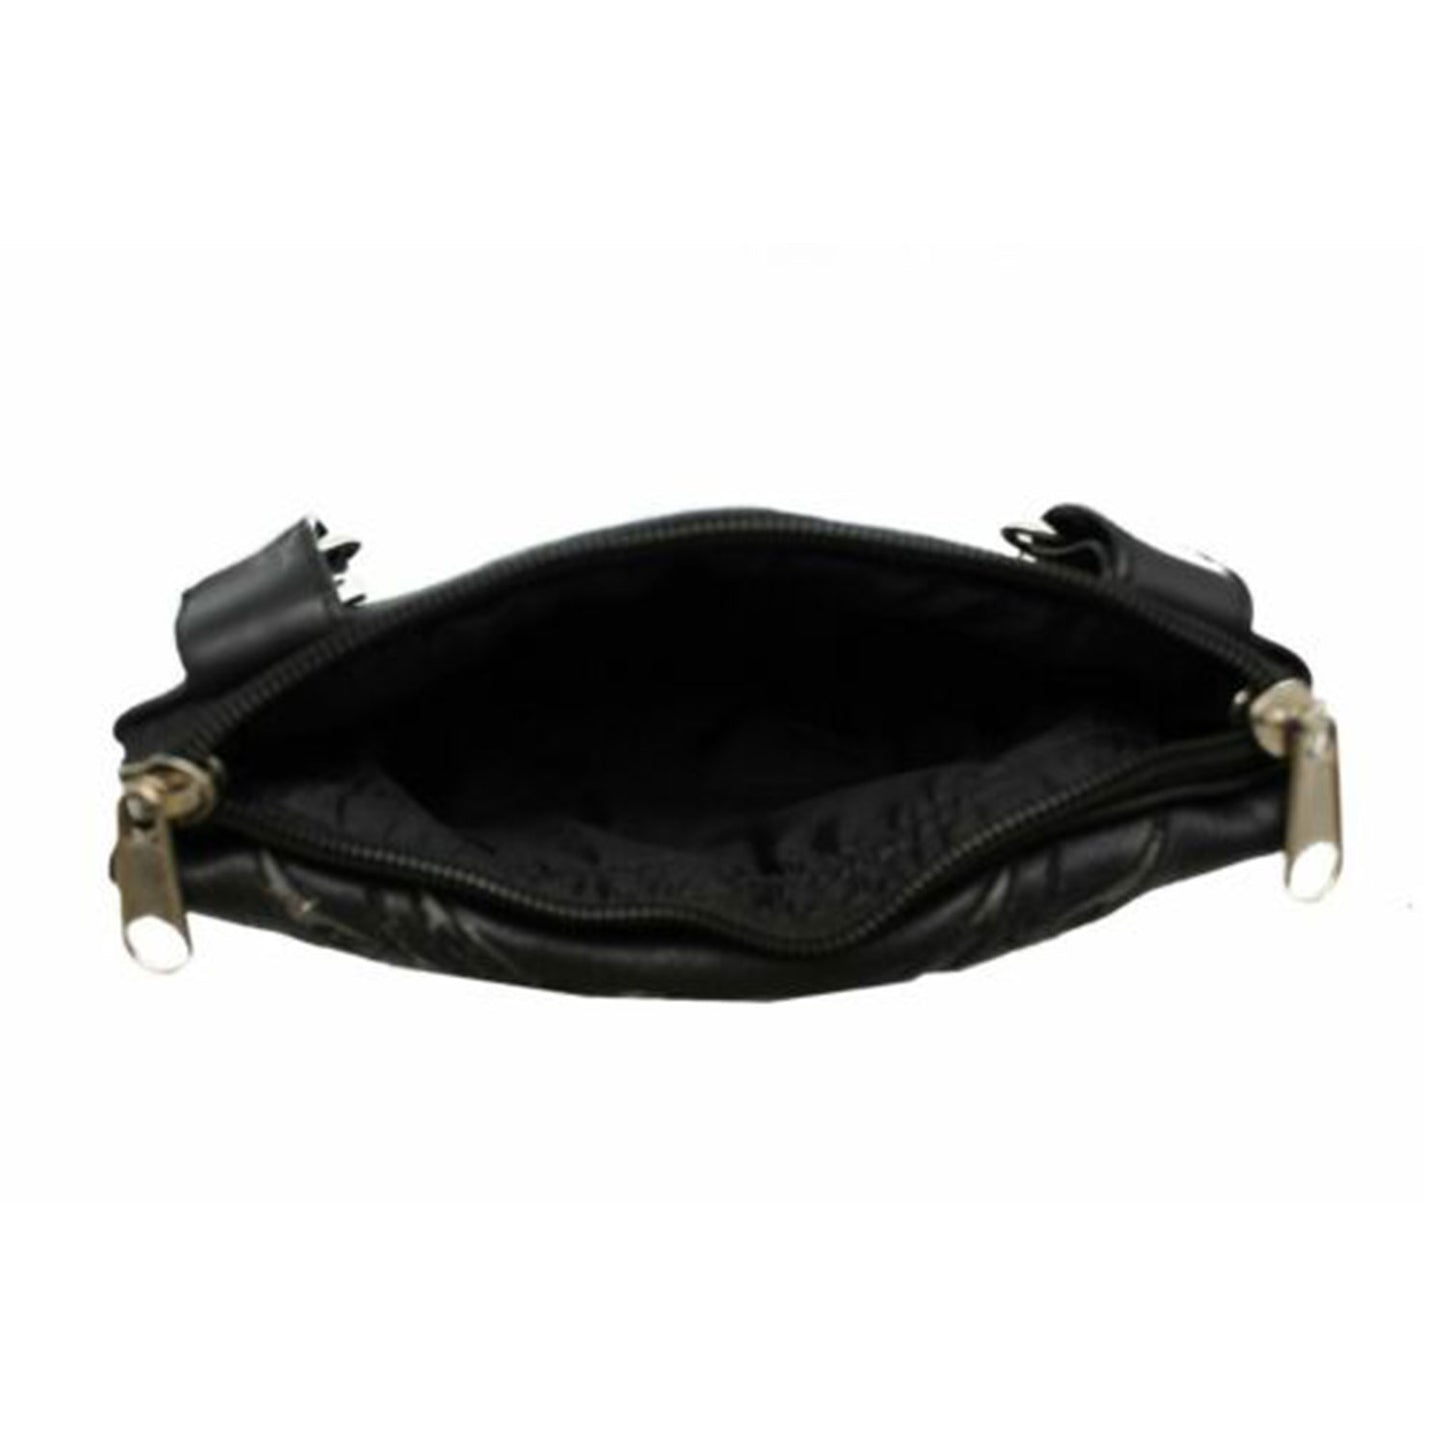 Leather Loop Bag Convertable Crossbody